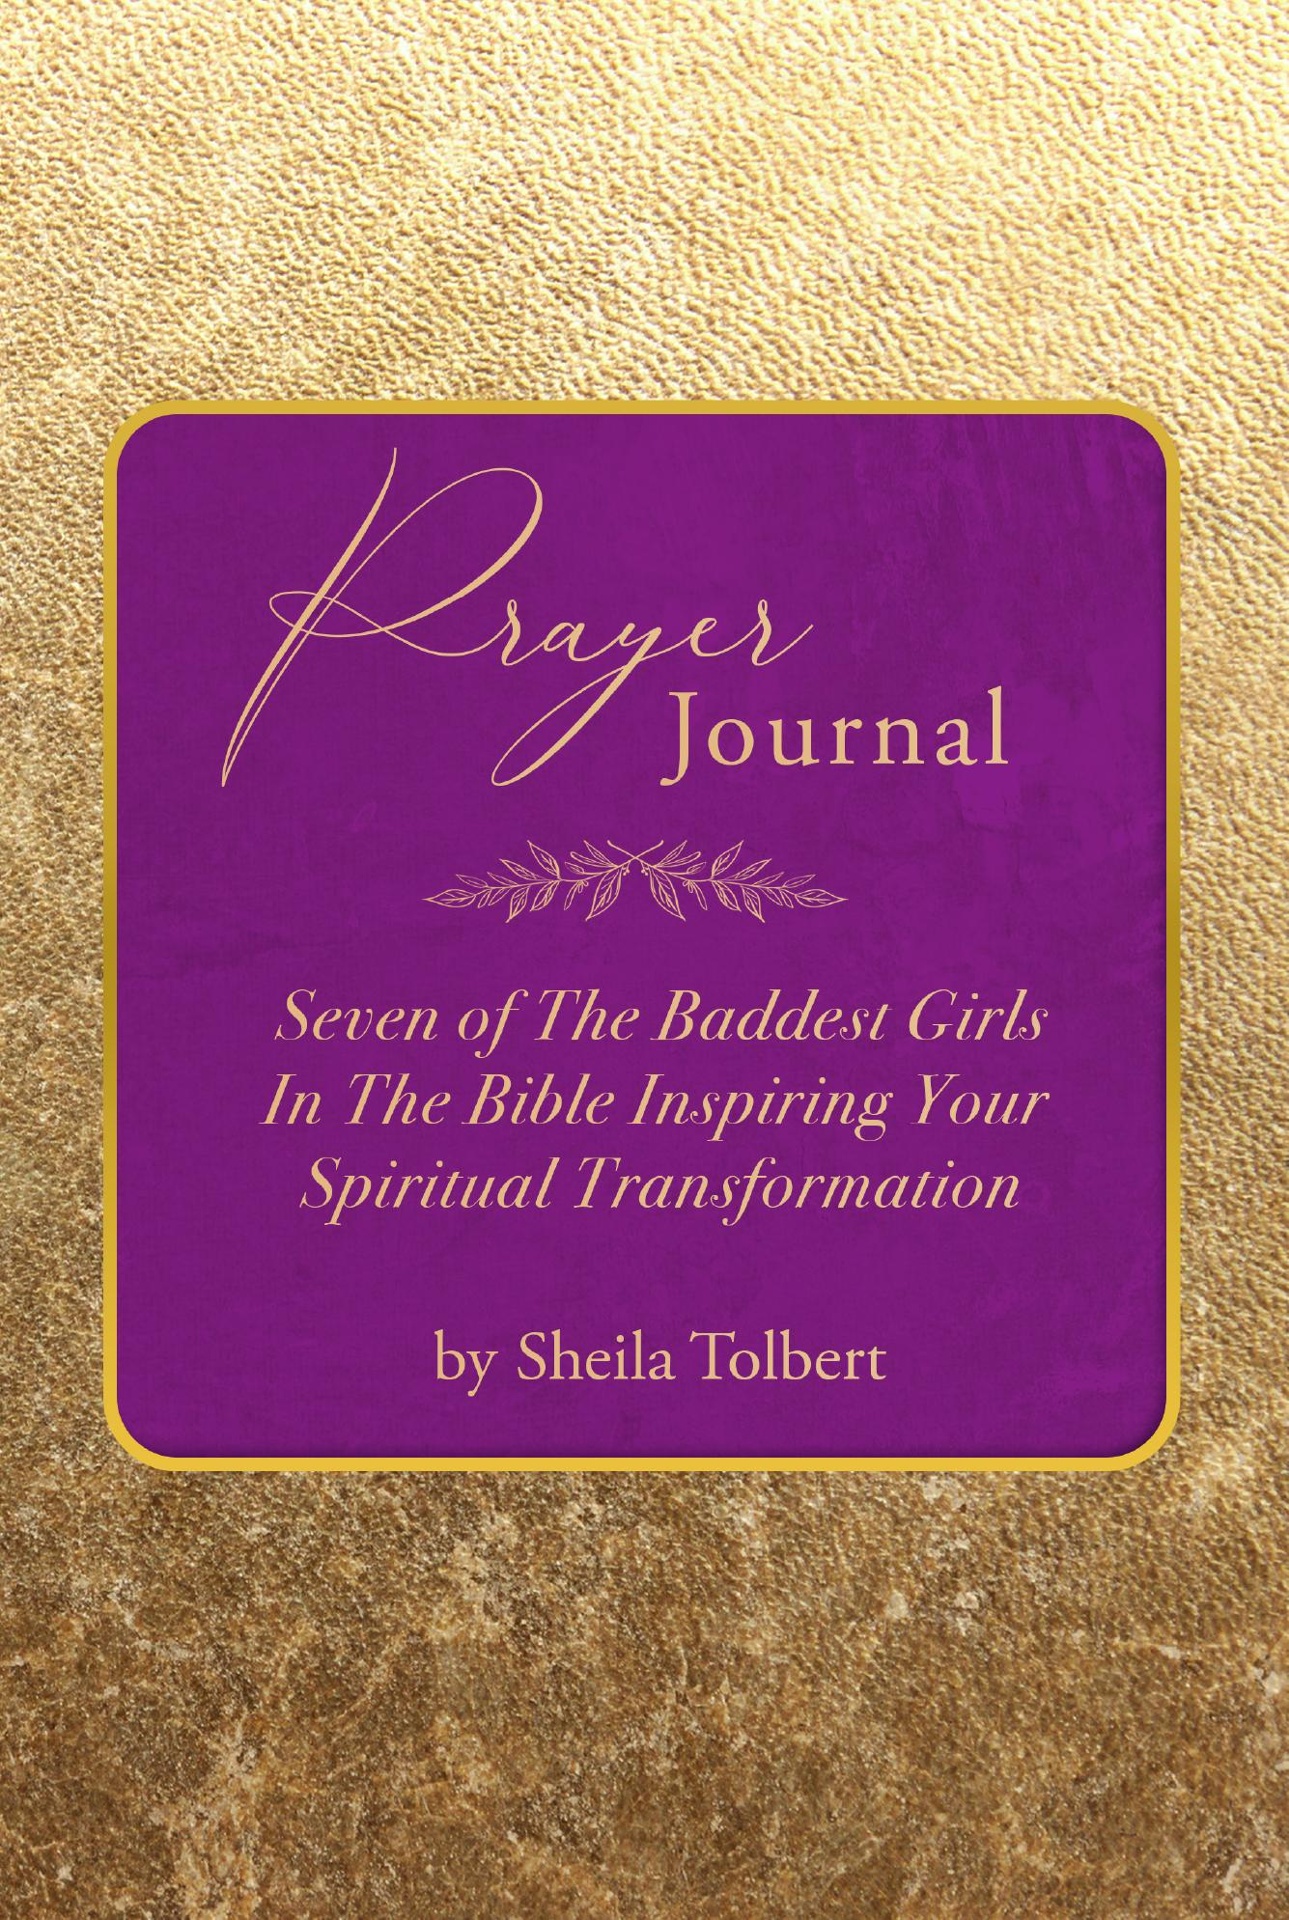 Prayer Journal Book Cover